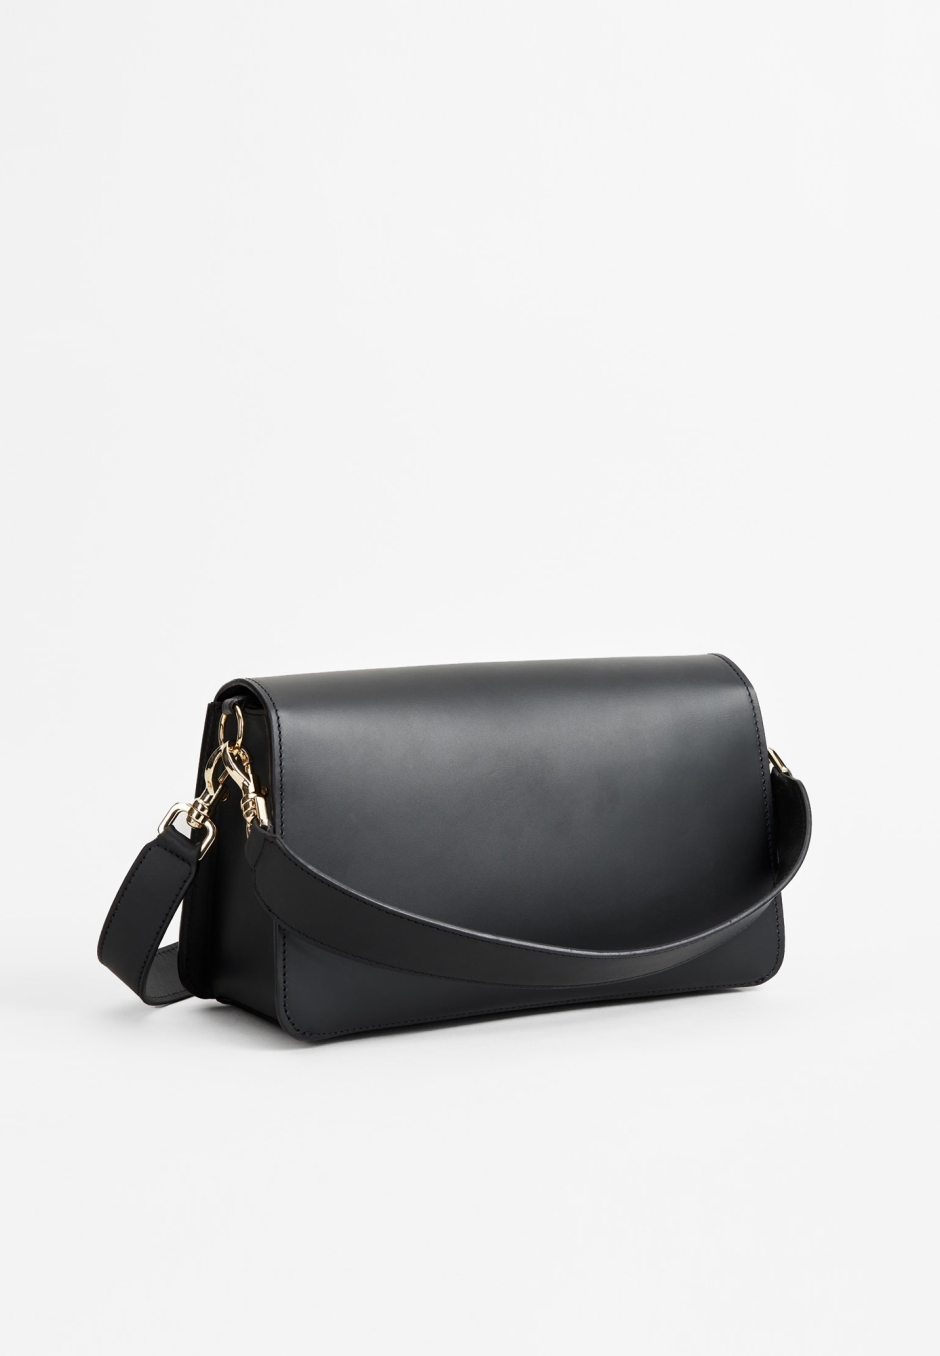 ATP Atelier Molino Black Leather Big Baguette Bag